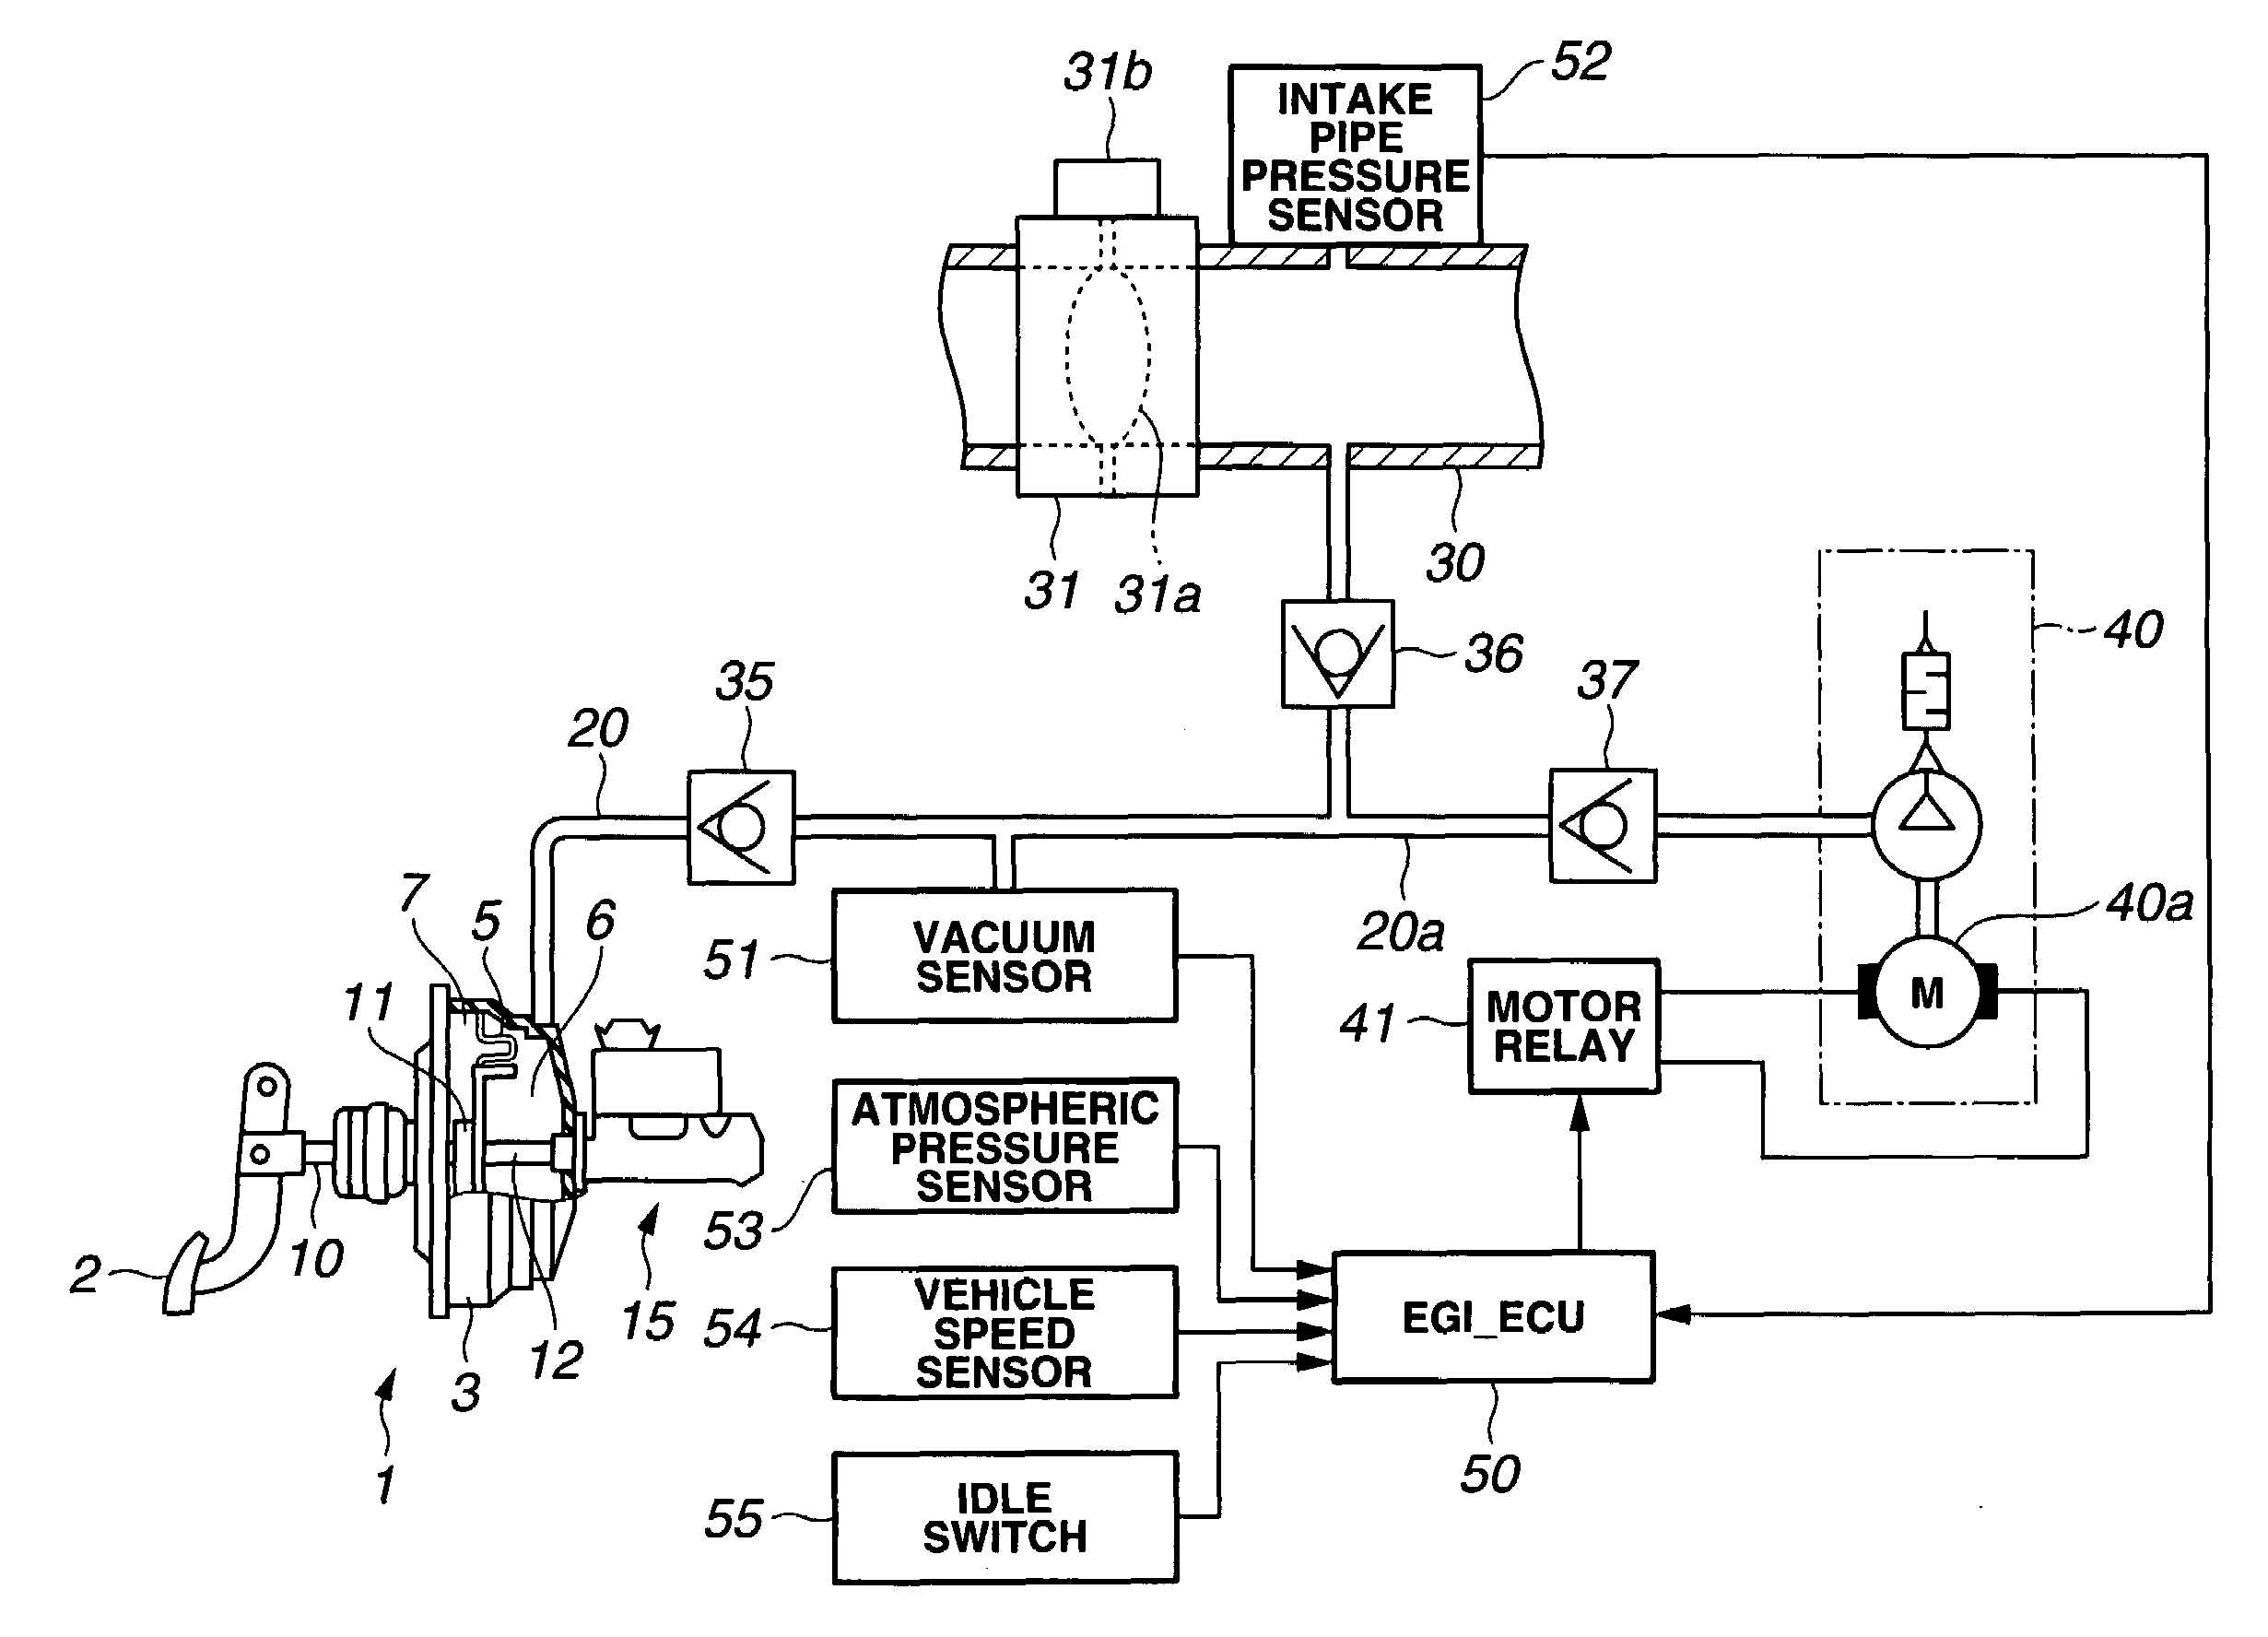 Control system for brake vacuum pump